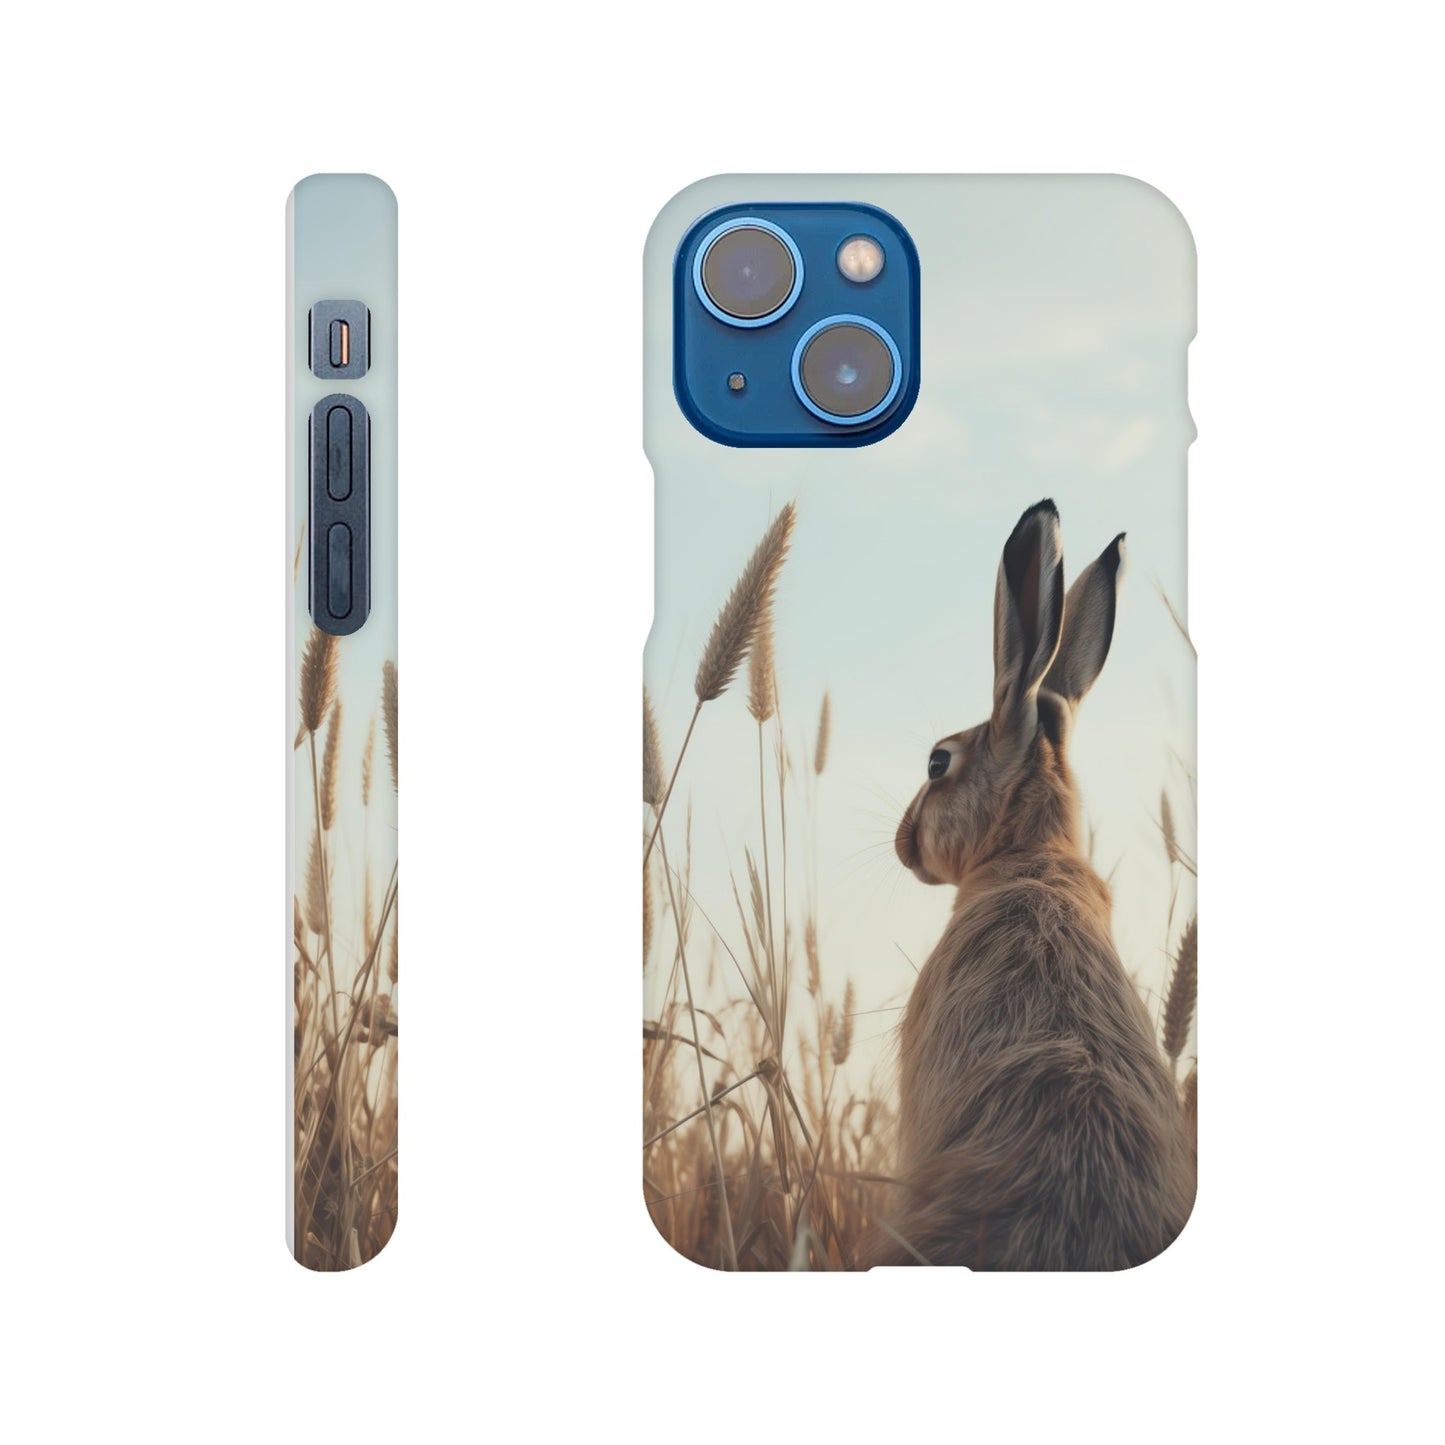 Souvenirs de Lapin (iPhone | Coque Samsung - frais de port inclus)